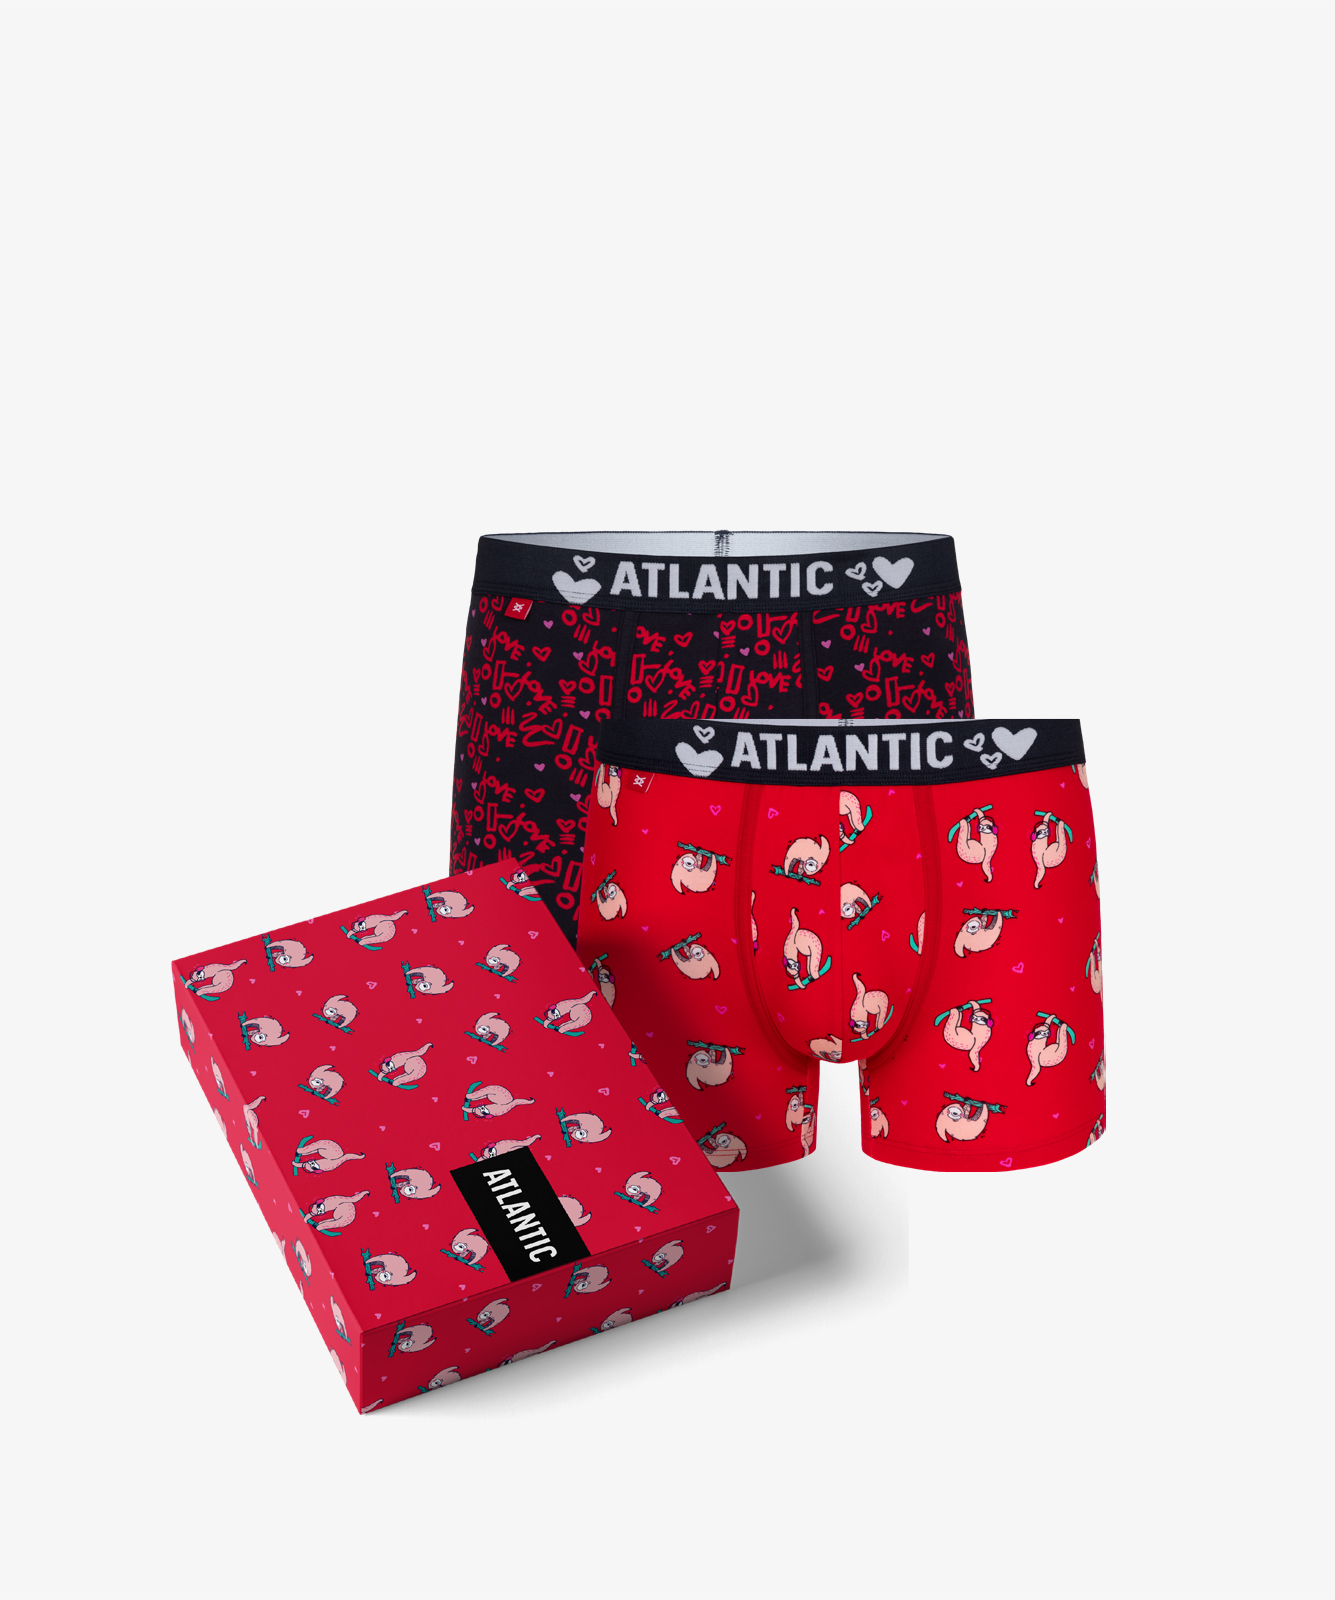 Atlantic_valentines_dod_2GMH-018-1